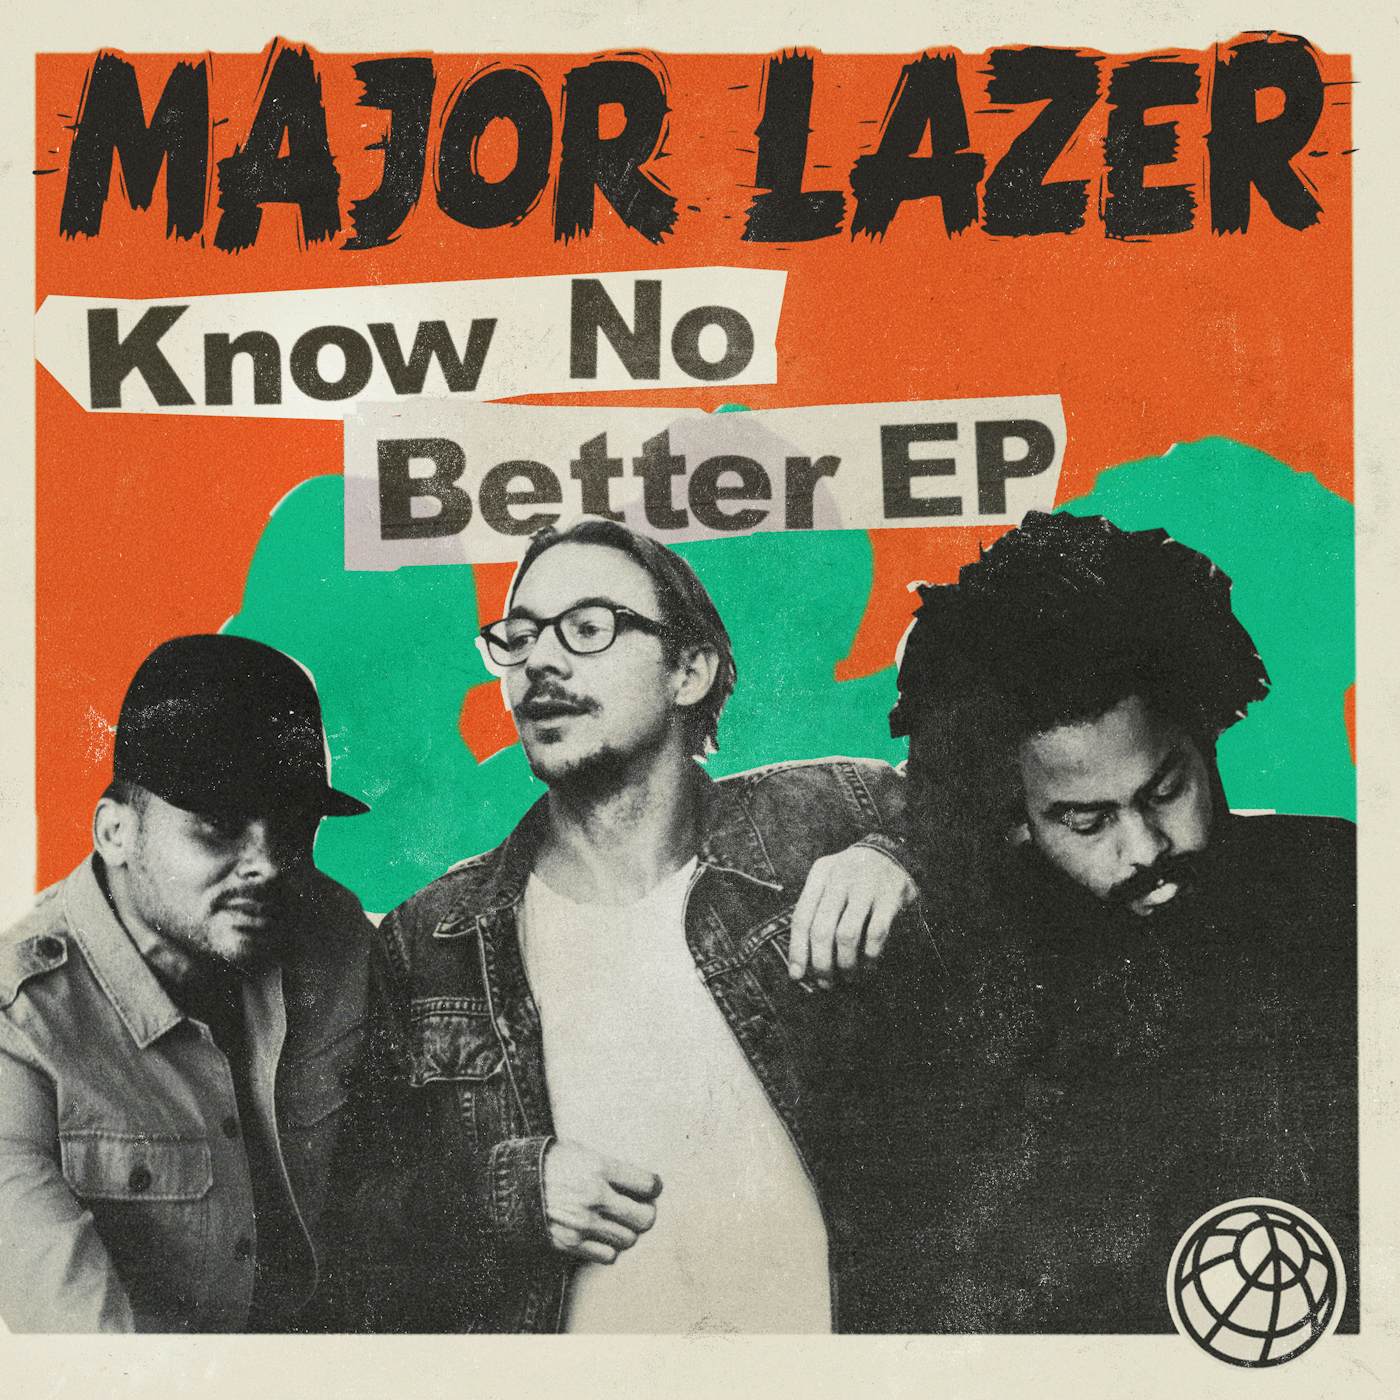 Major Lazer KNOW NO BETTER CD